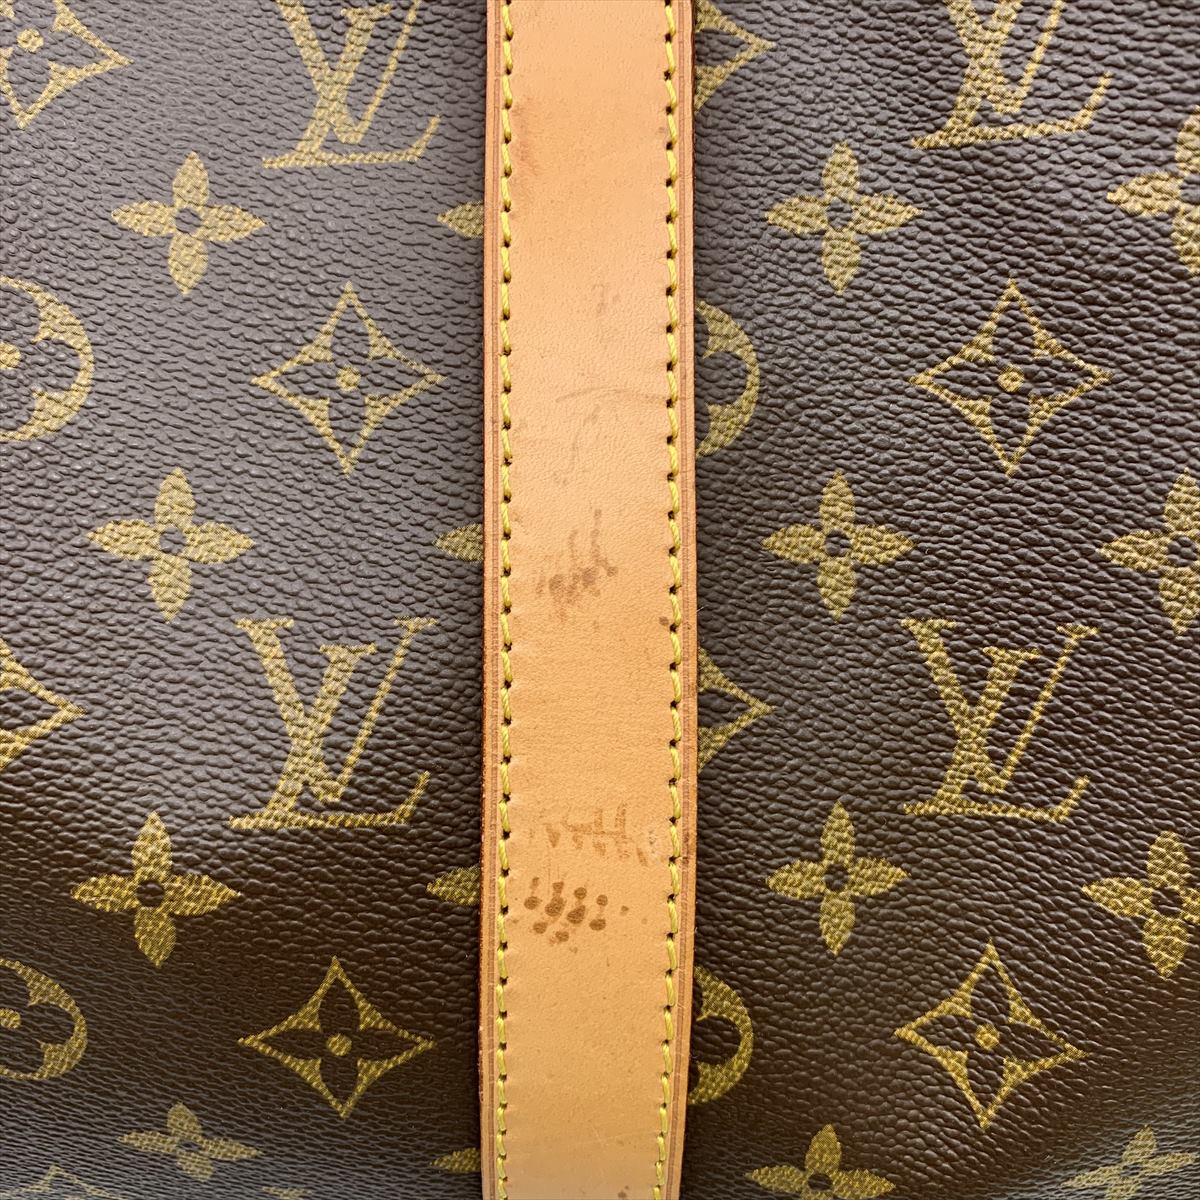 Louis Vuitton Monogram Keepall 50 M41426 Boston Bag